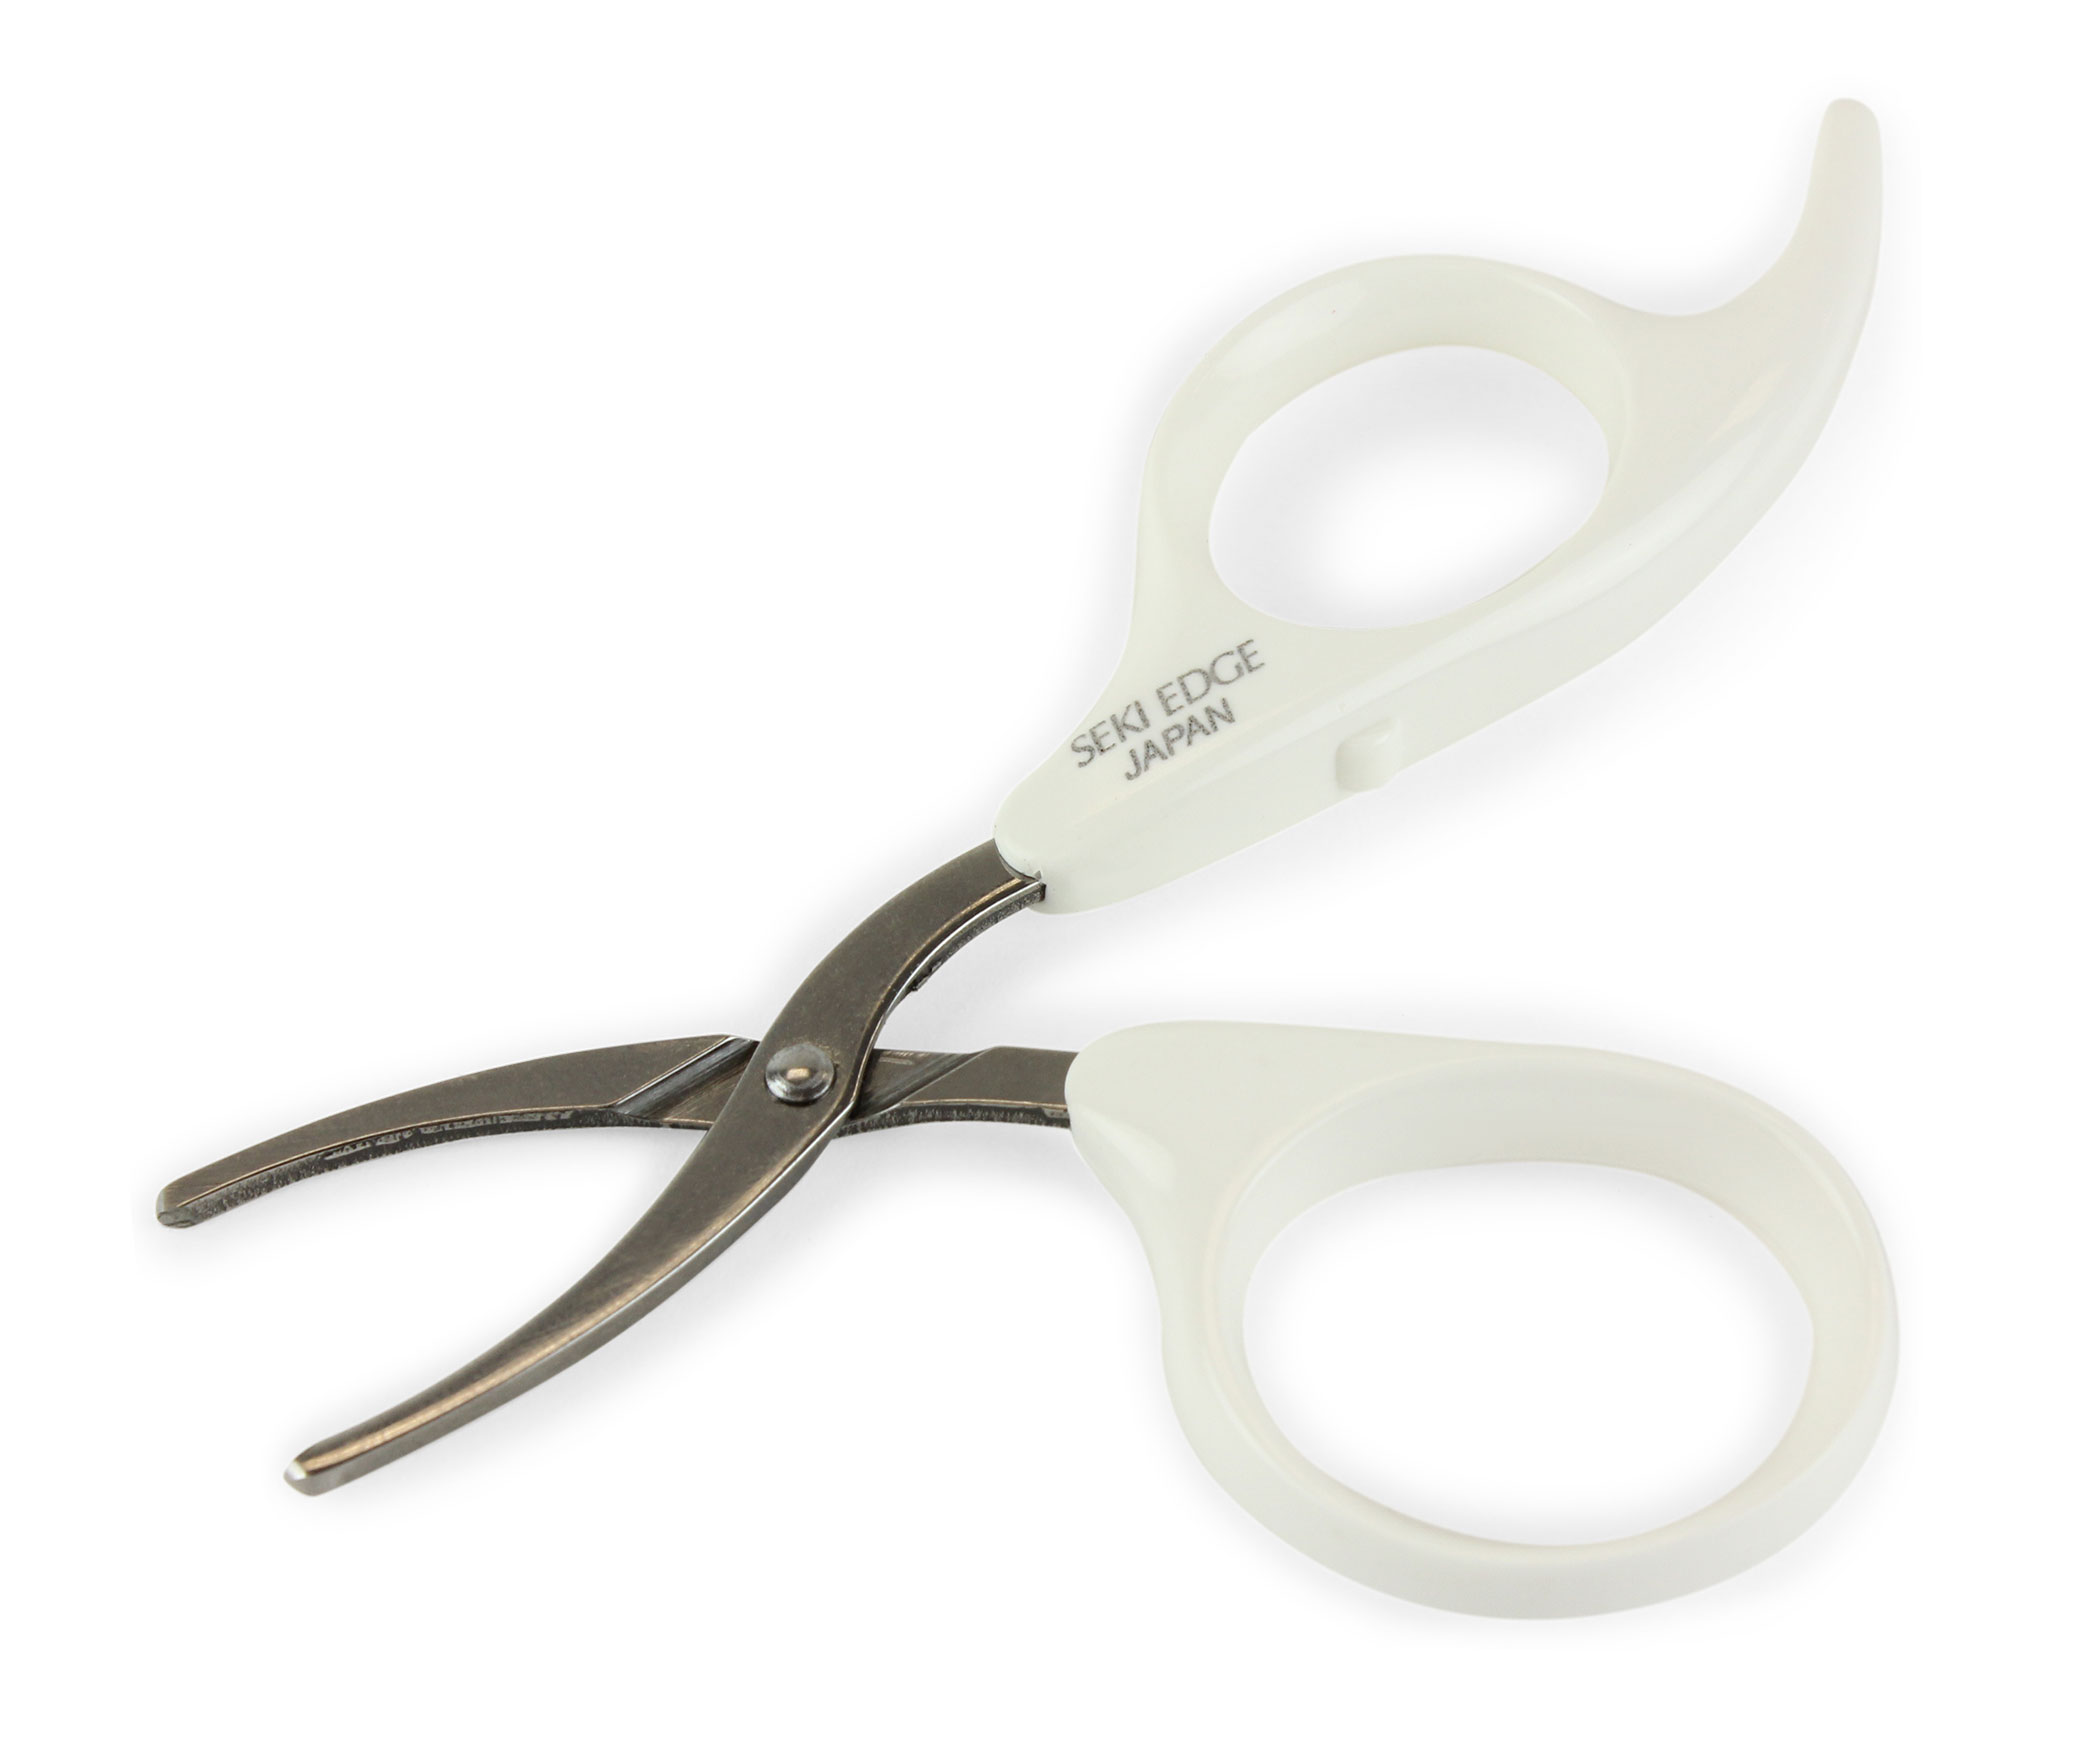 Seki Edge Scissors Tweezer (SS-503) round tip